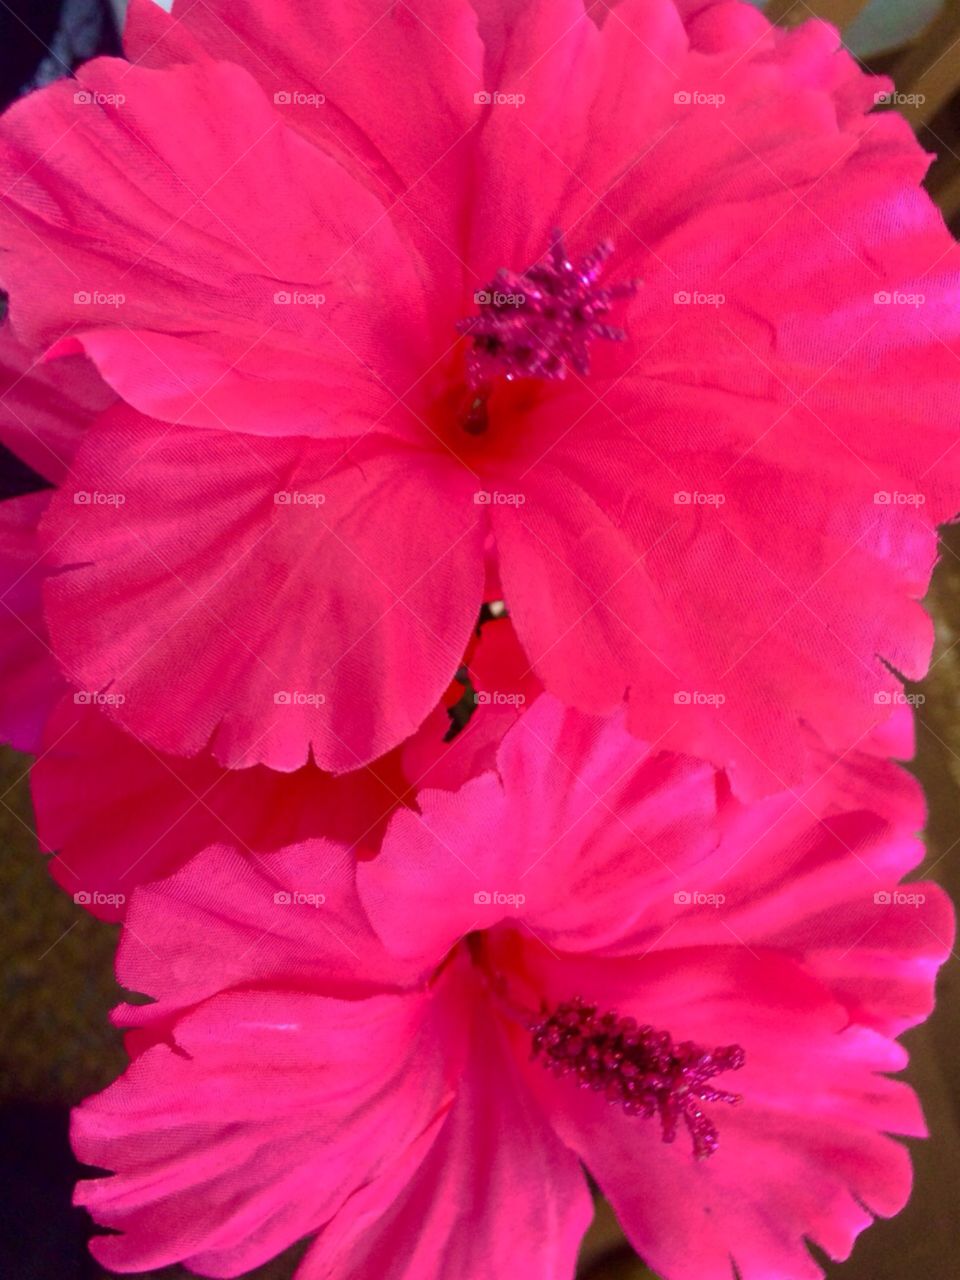 Pretty pink flowers 